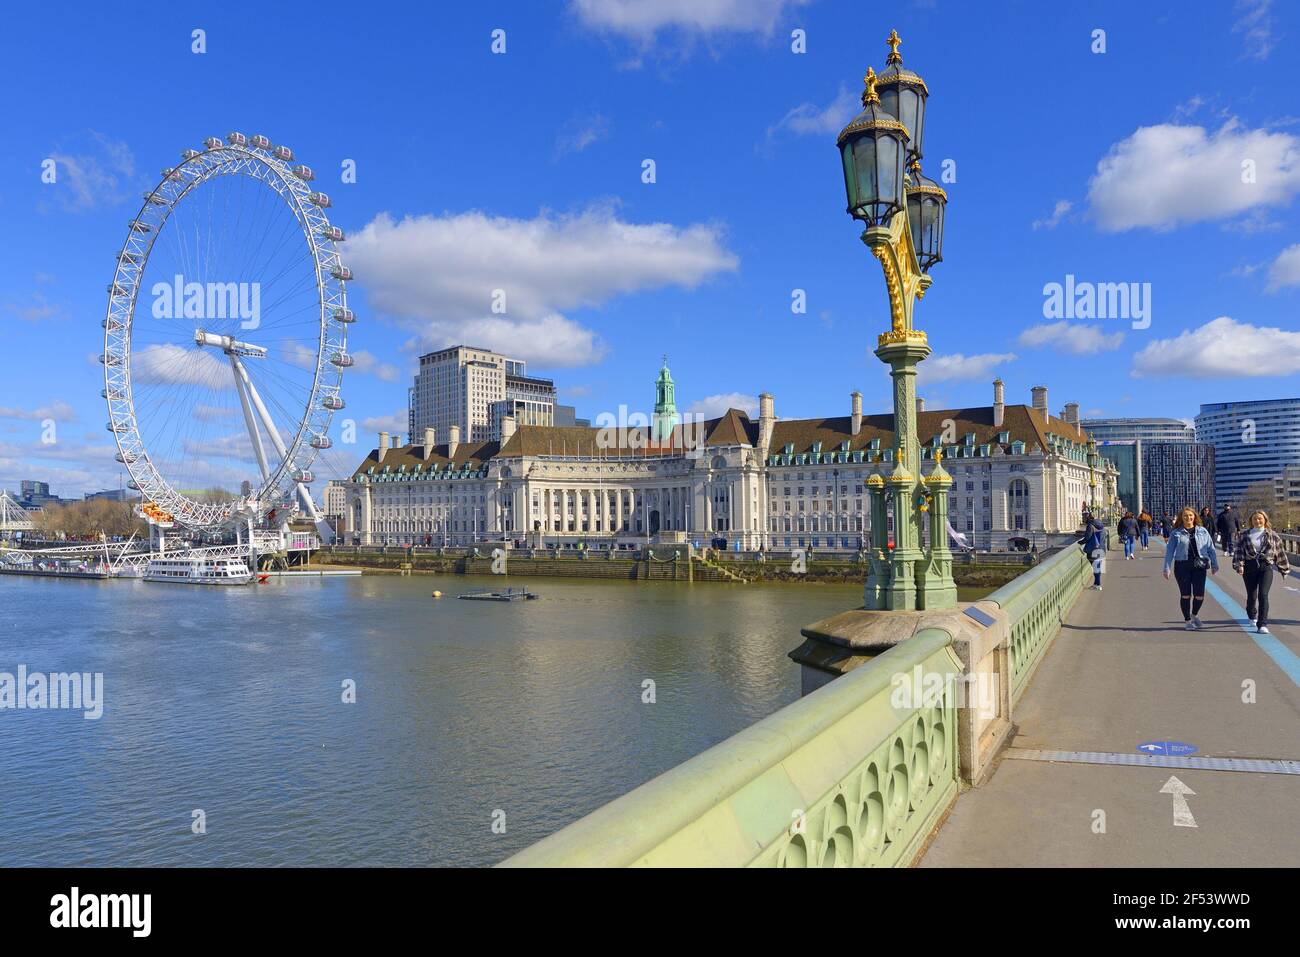 London, England, UK. Westminster Bridge, County Hall and the London Eye / Millennium Wheel Stock Photo